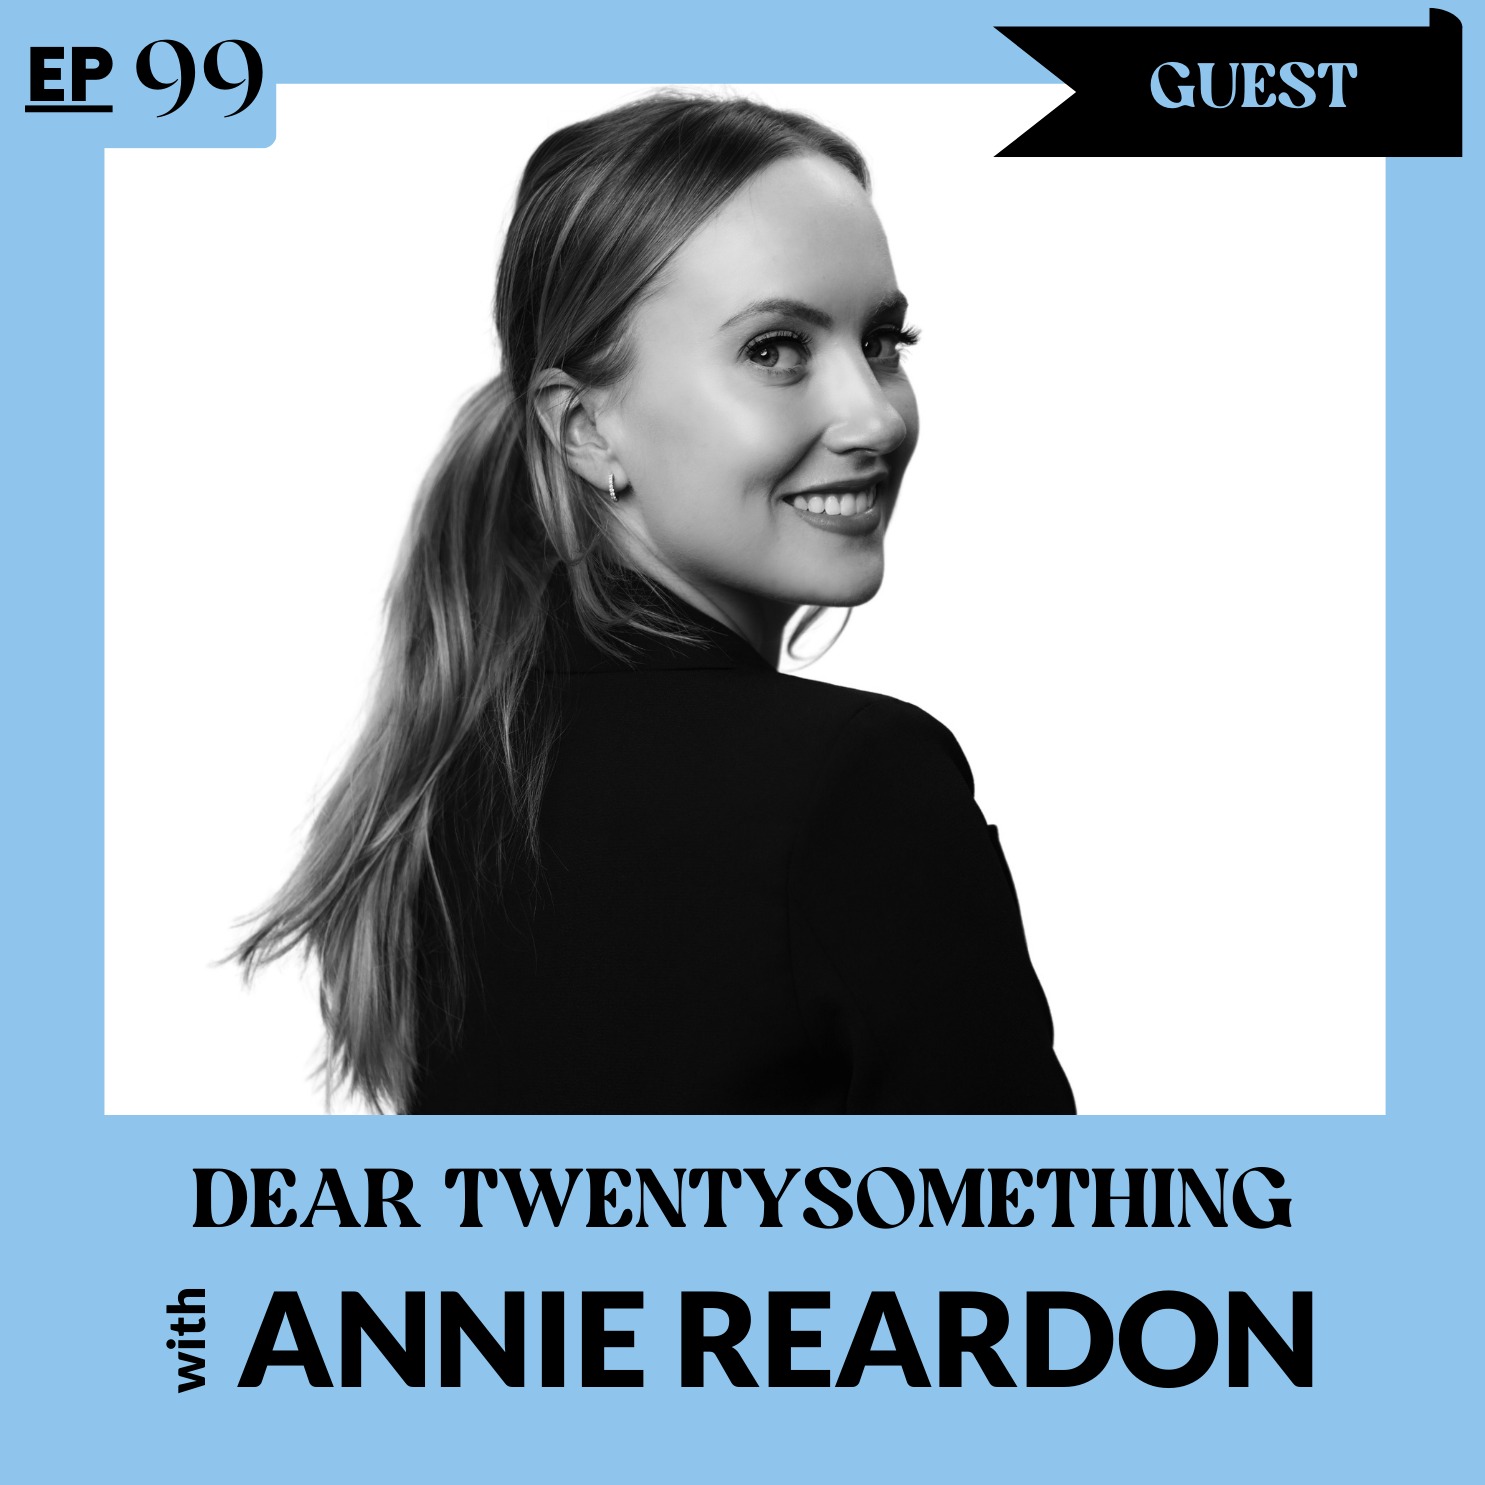 Annie Reardon: Co-Founder & Co-CEO of Ludo